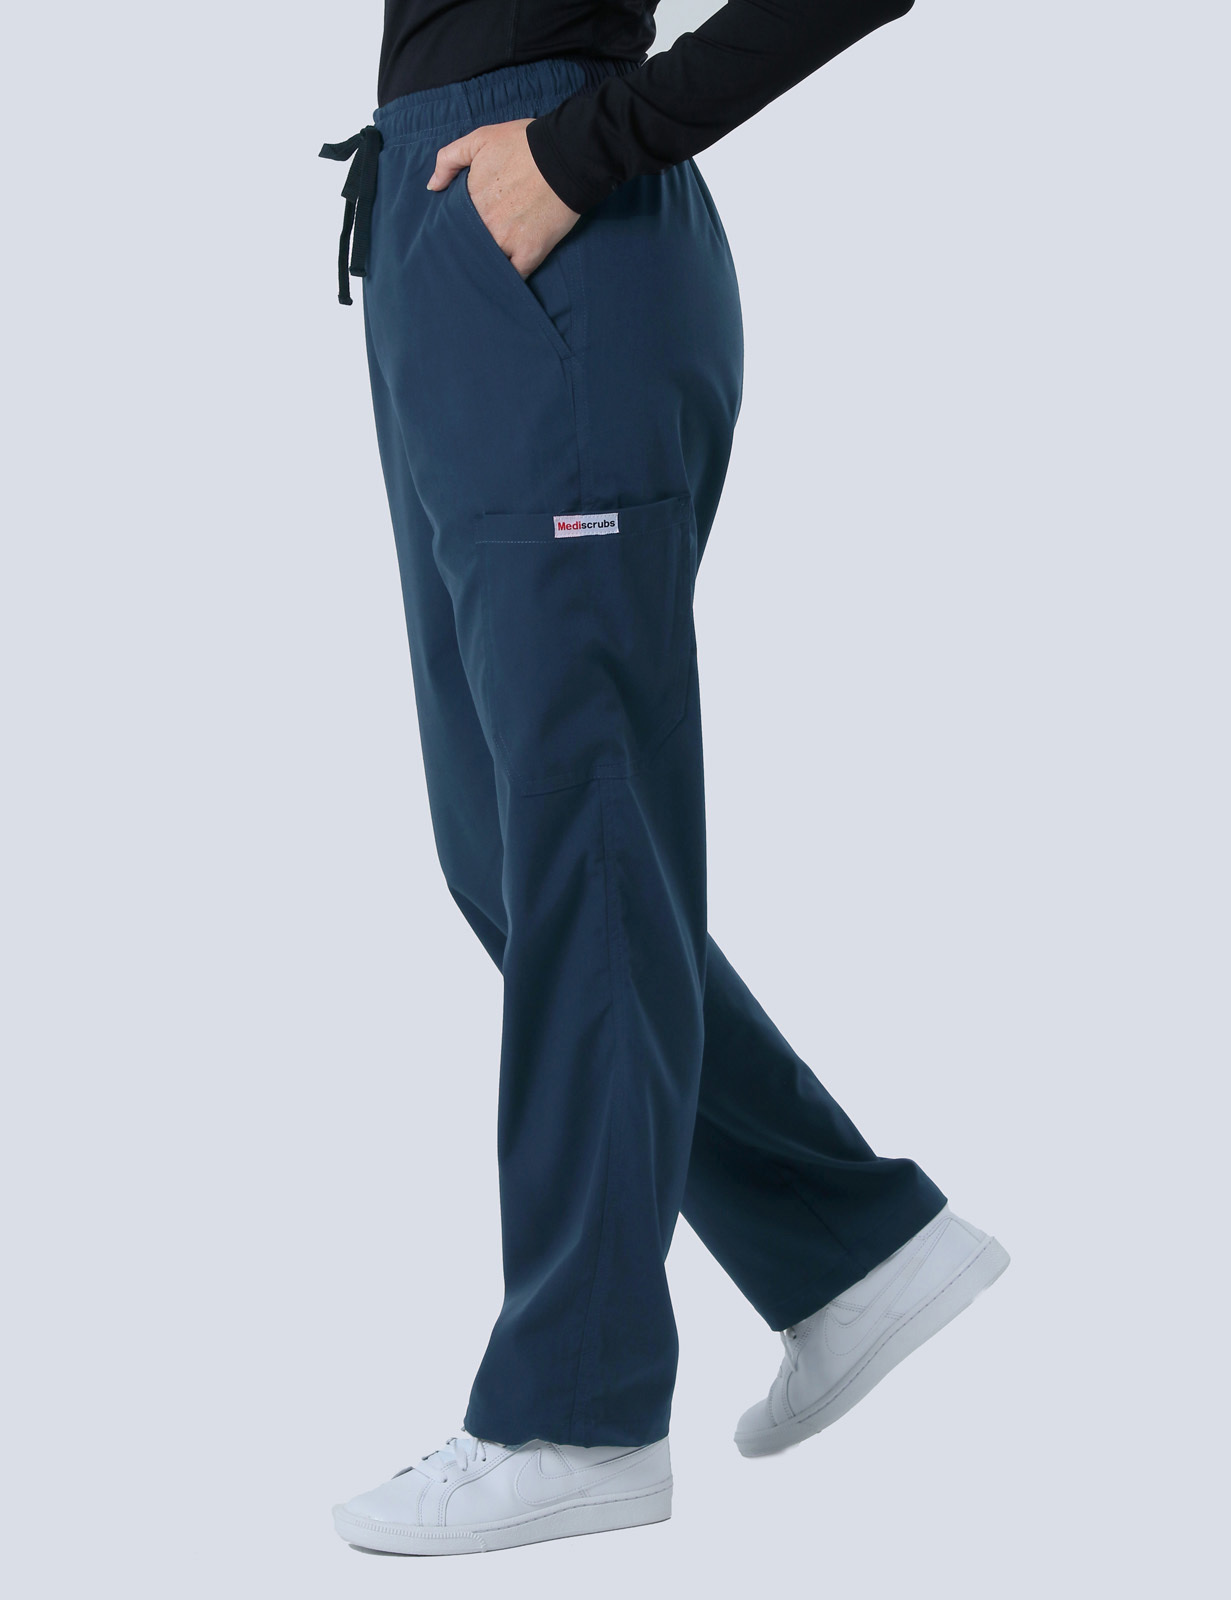 Peninsula Health Frankston - ICU ANUM (4 Pocket Scrub Top and Cargo Pants in Navy incl Logos)